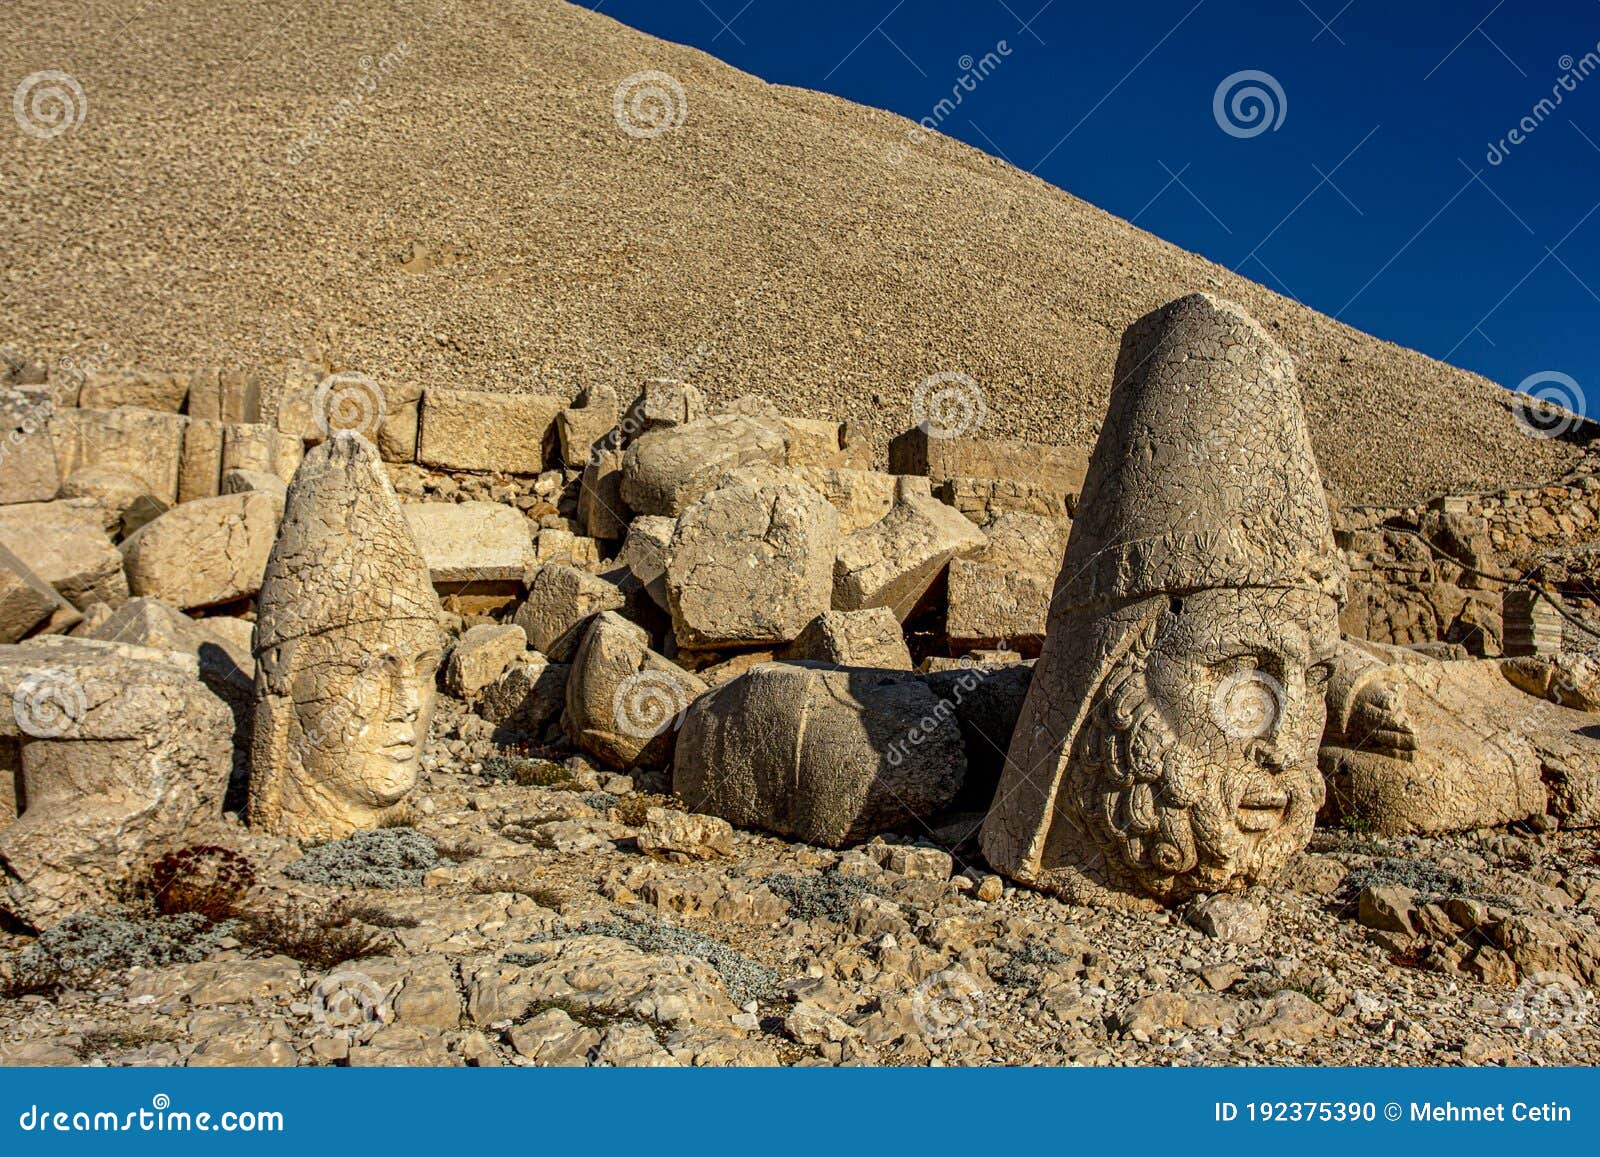 antique statues on nemrut mountain, turkey. the unesco world heritage site at mount nemrut where king antiochus of commagene is